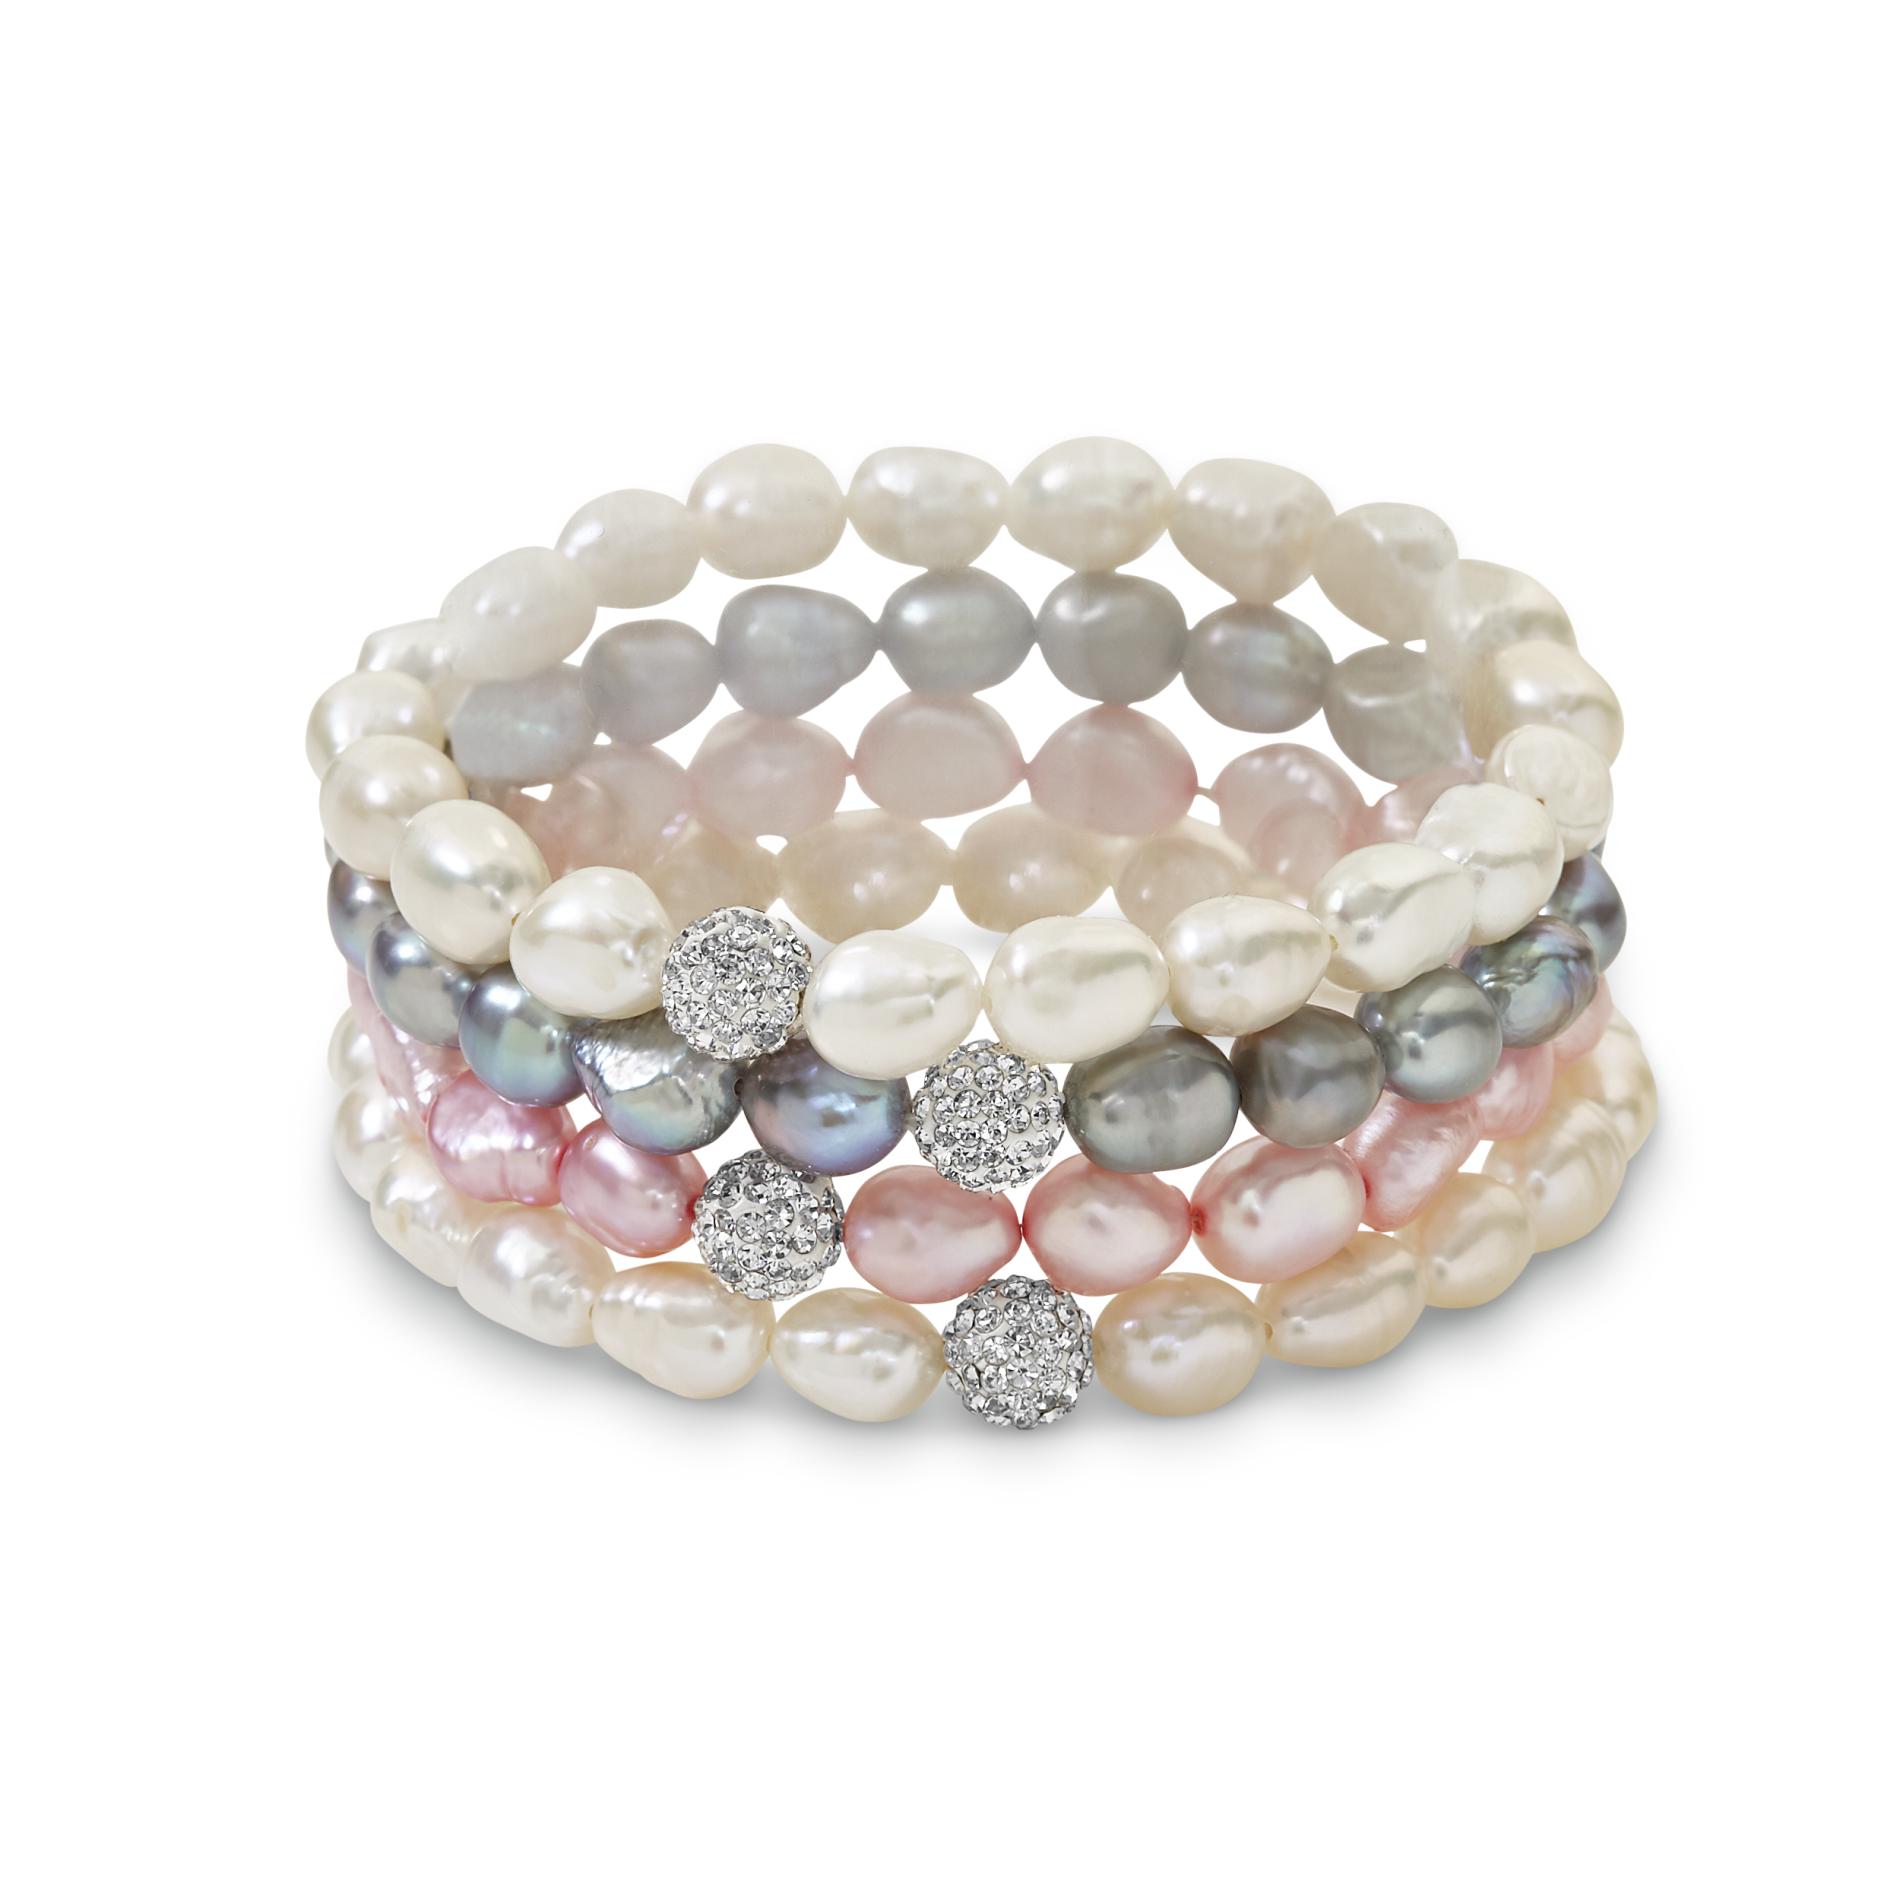 4-Piece Cultured Freshwater Pearl Stretch Bracelet Set